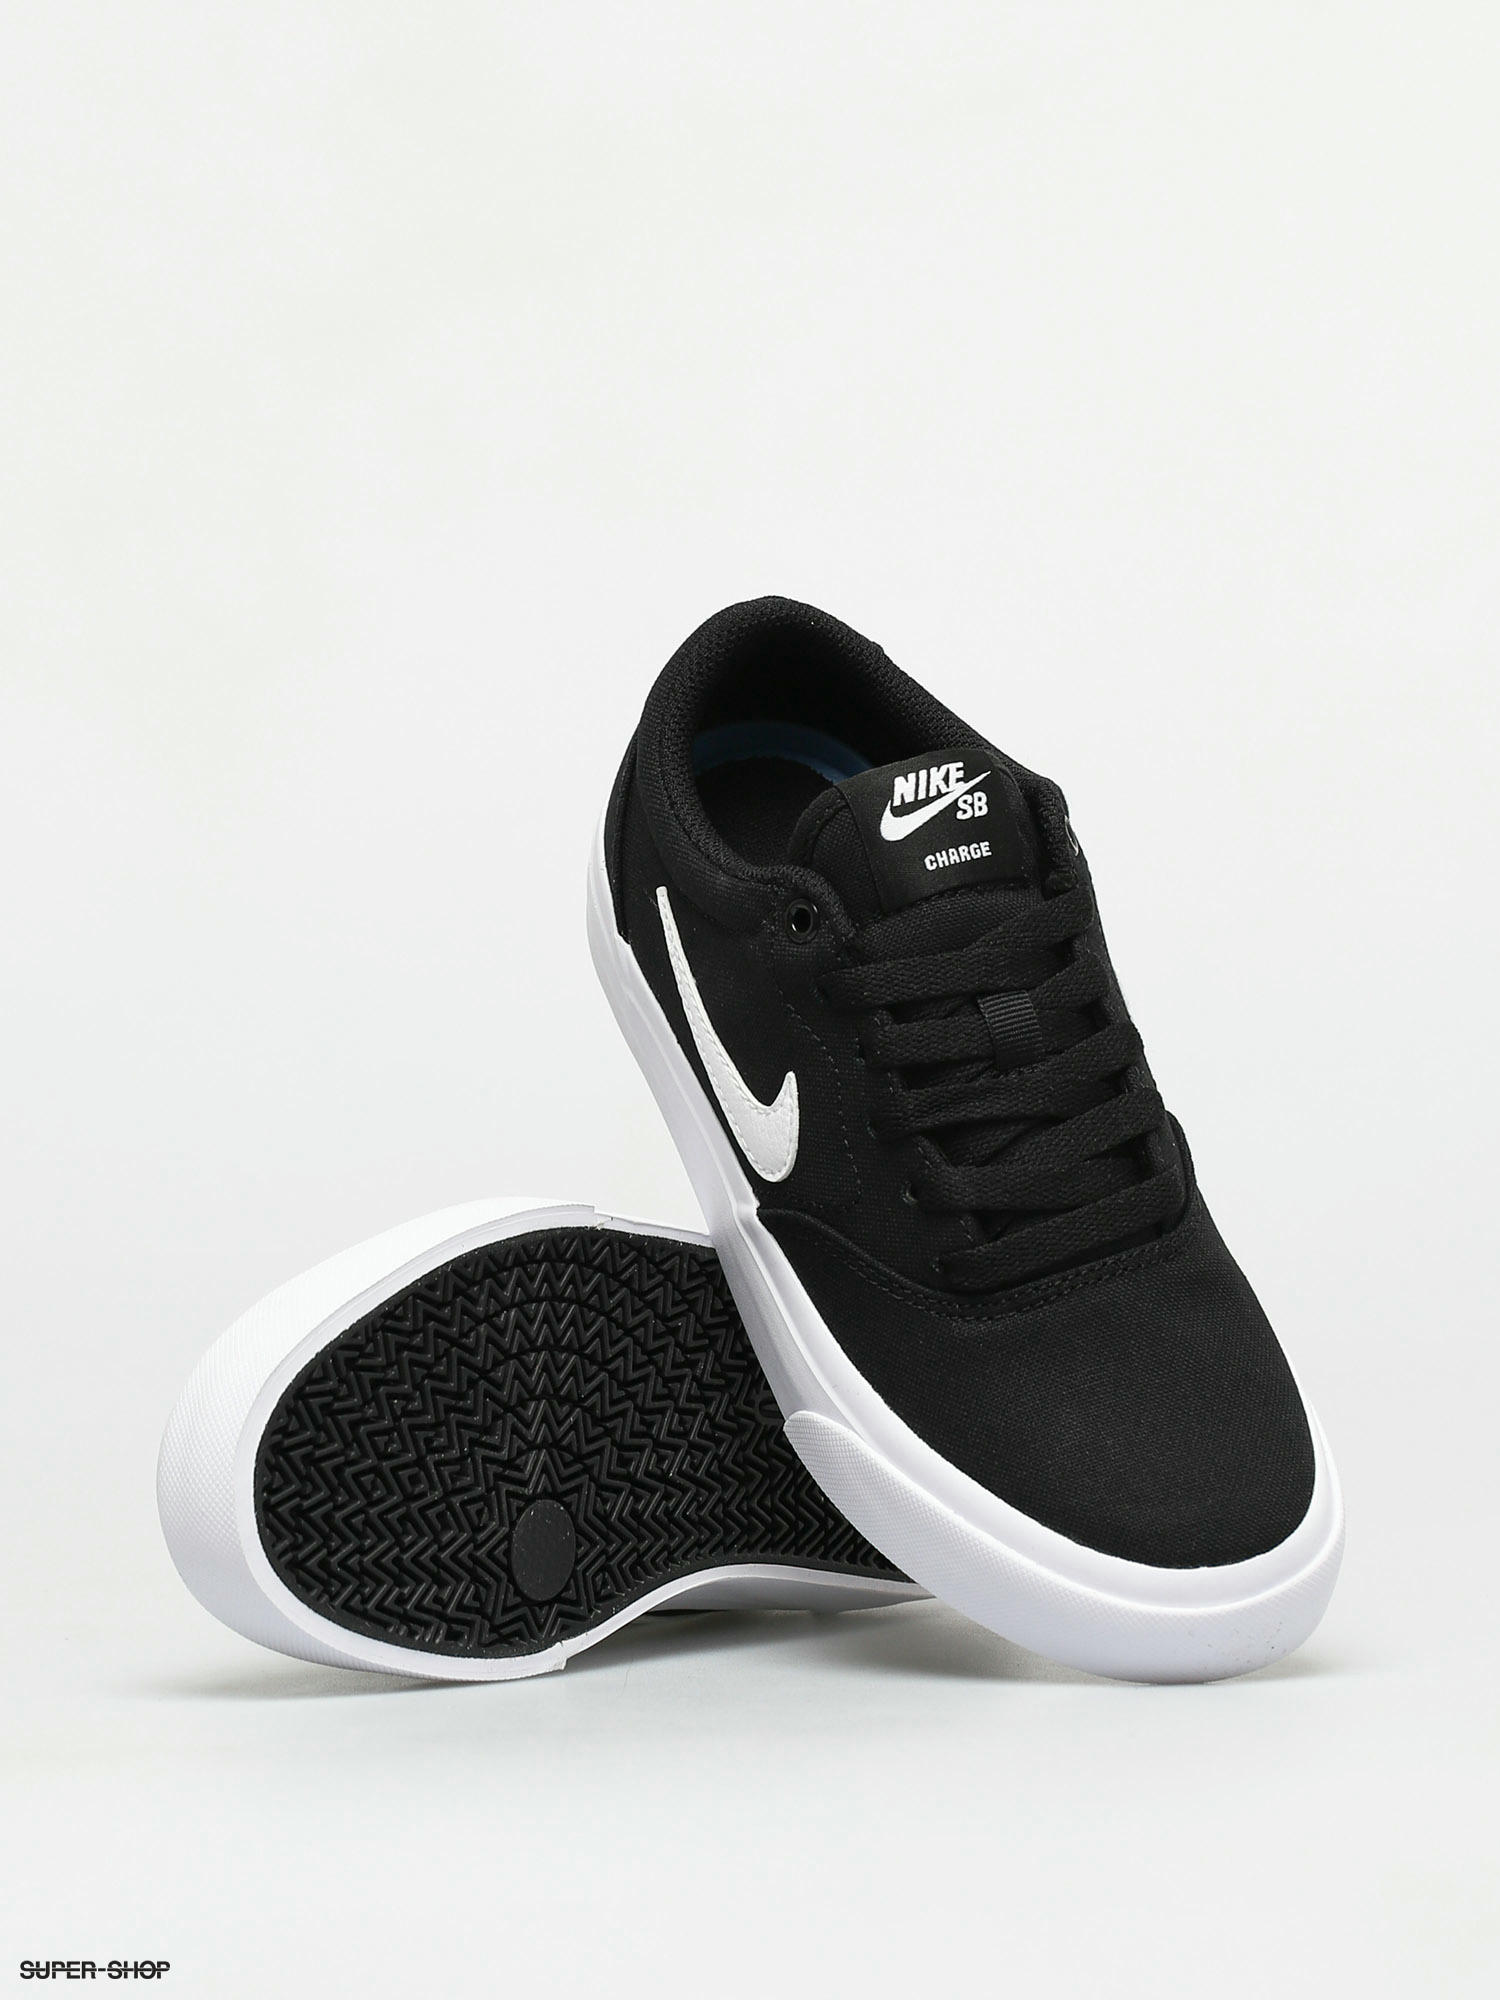 presente Economía Molester Nike SB Charge Canvas Shoes (black/white black)